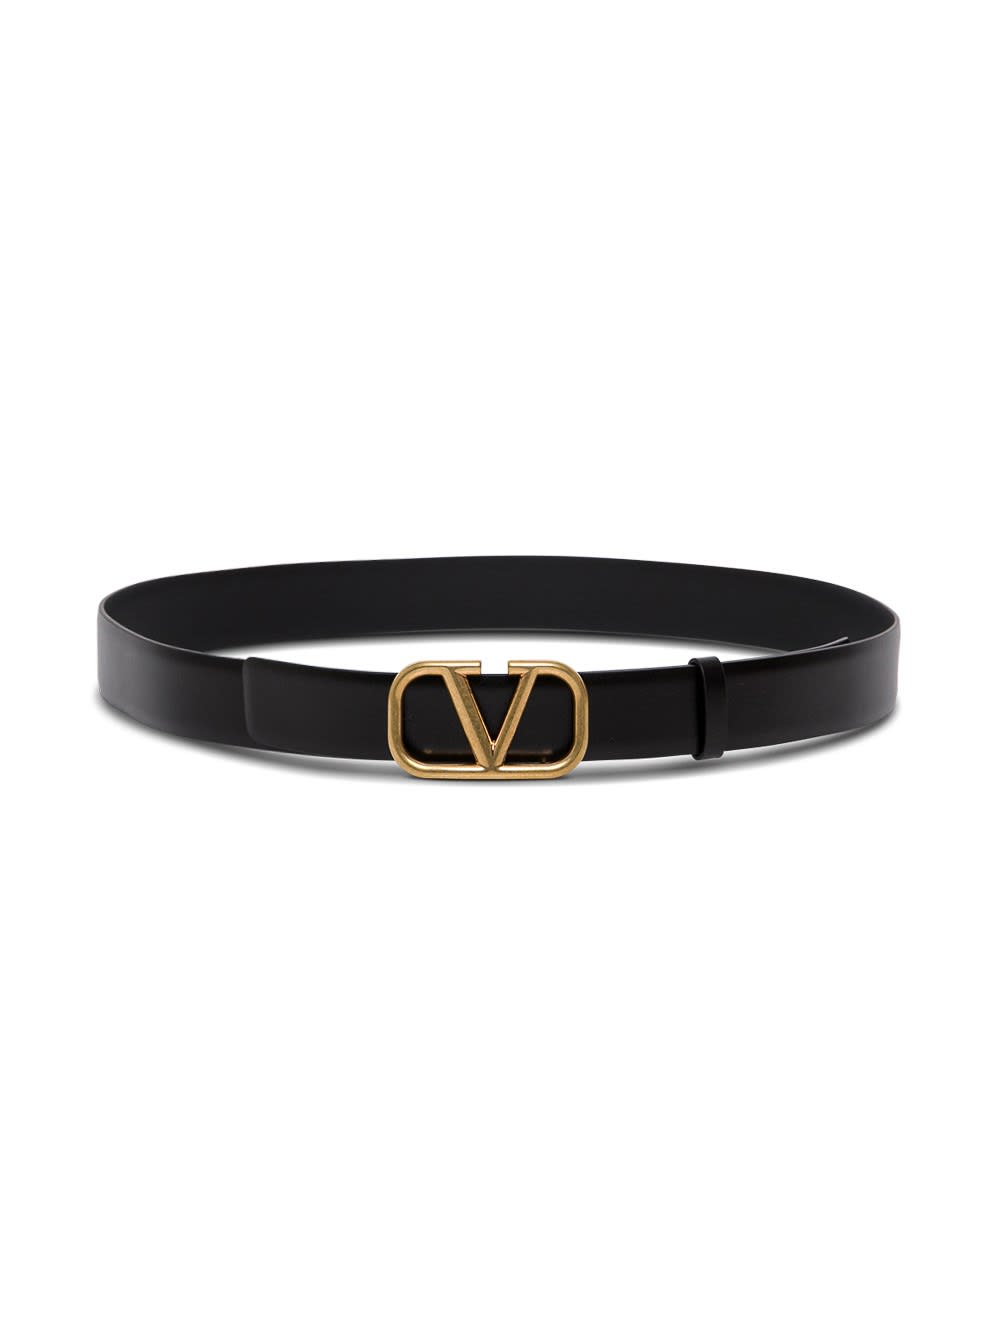 Valentino Garavani Black Leather Belt With Logo Buckle